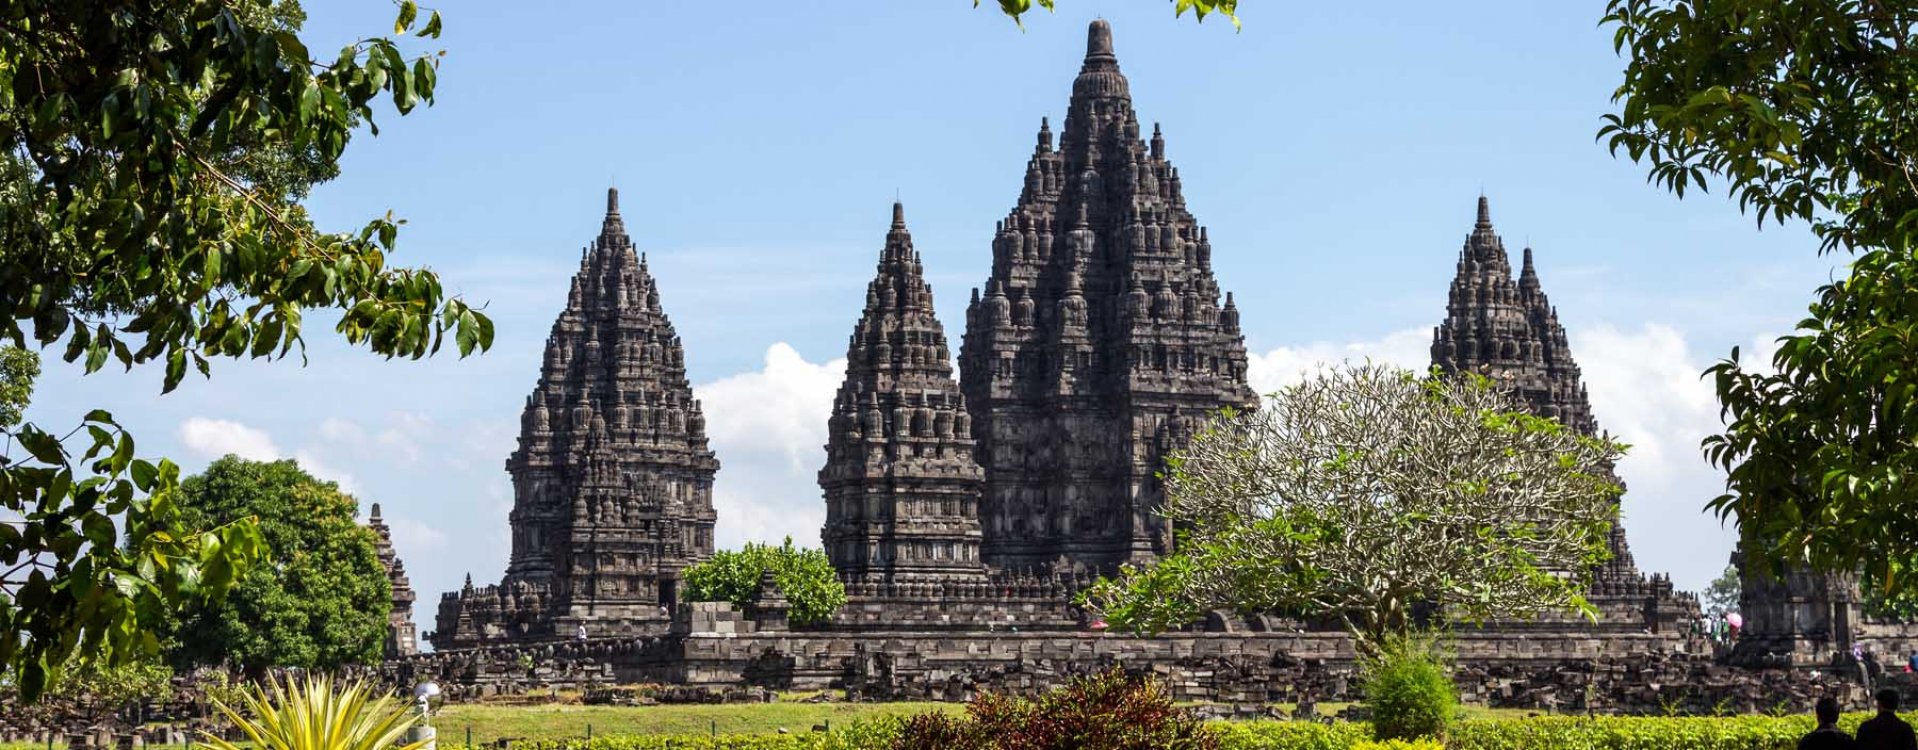 Prambanan tempel, Java